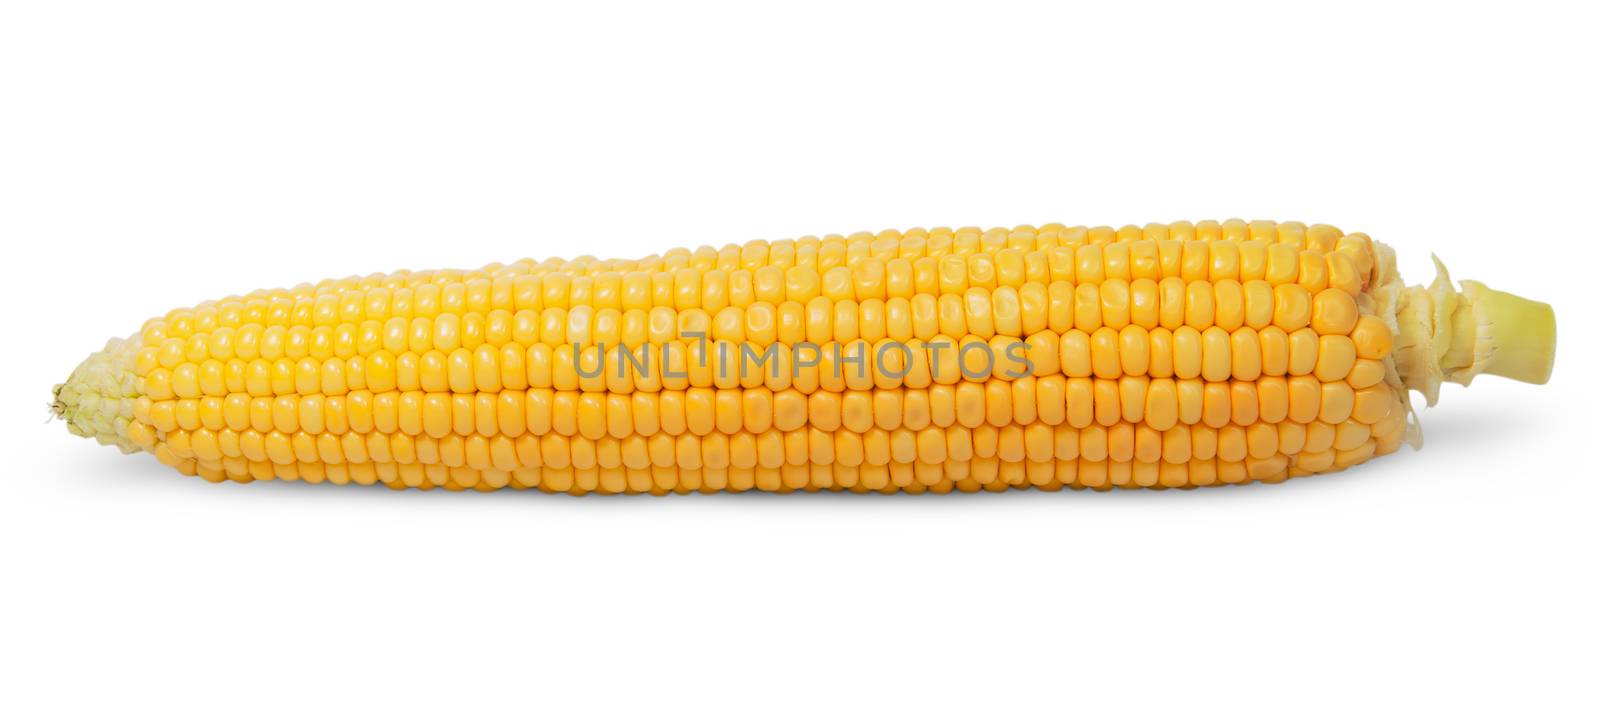 Purified ear of corn by Cipariss